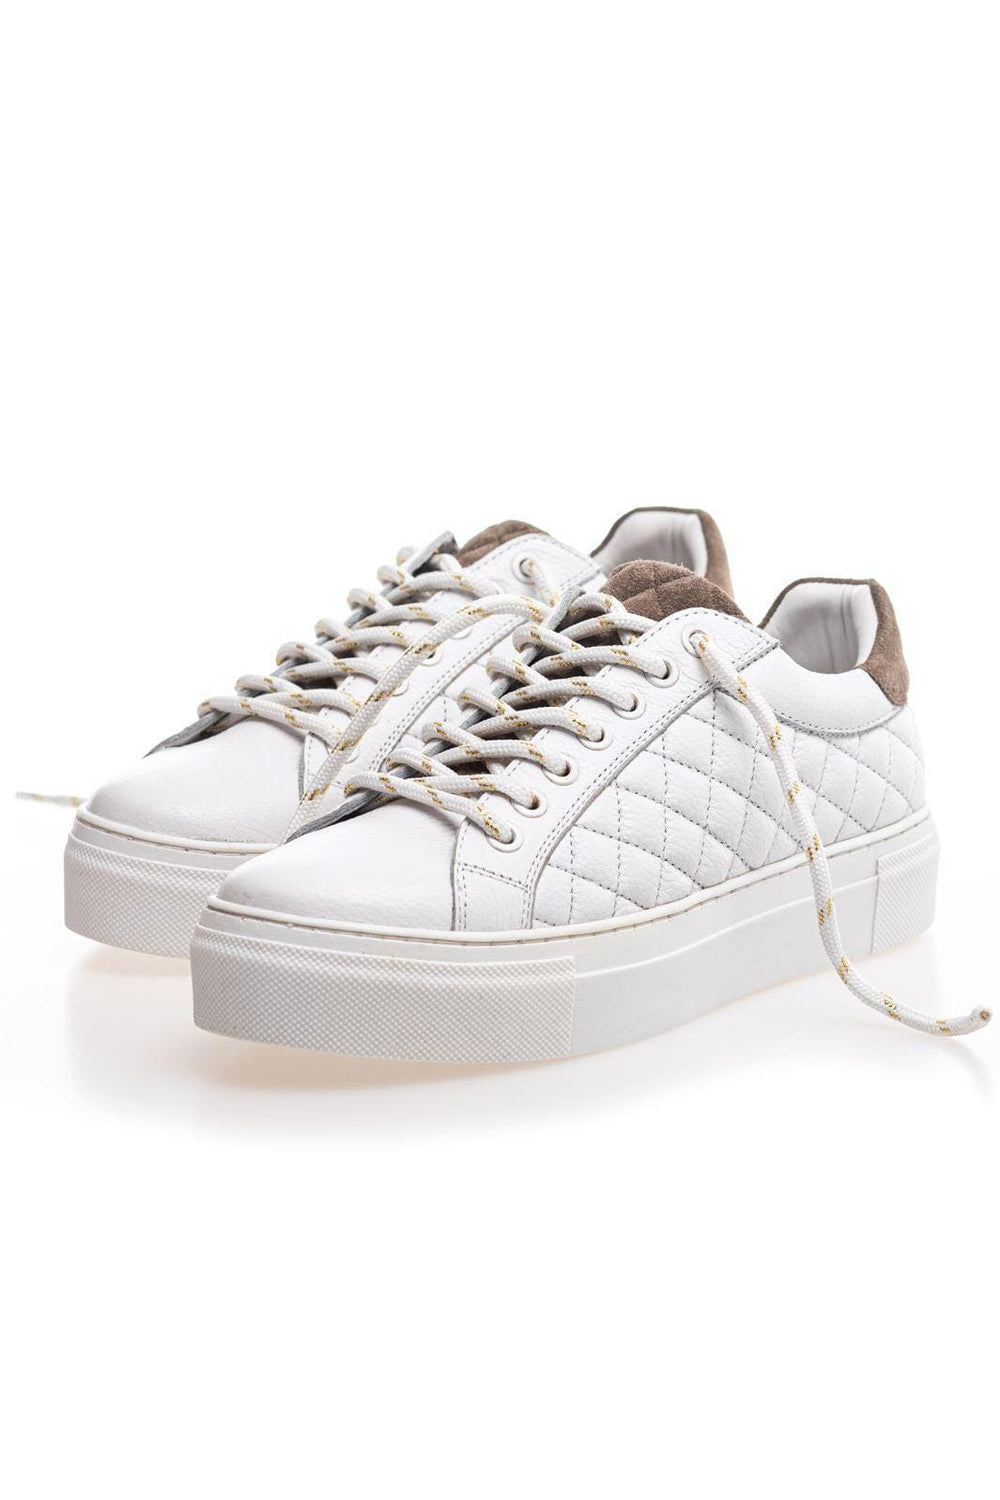 Forudbestilling - Copehangen Shoes - Days Of Fun - 0061 White (Mats) Sneakers 